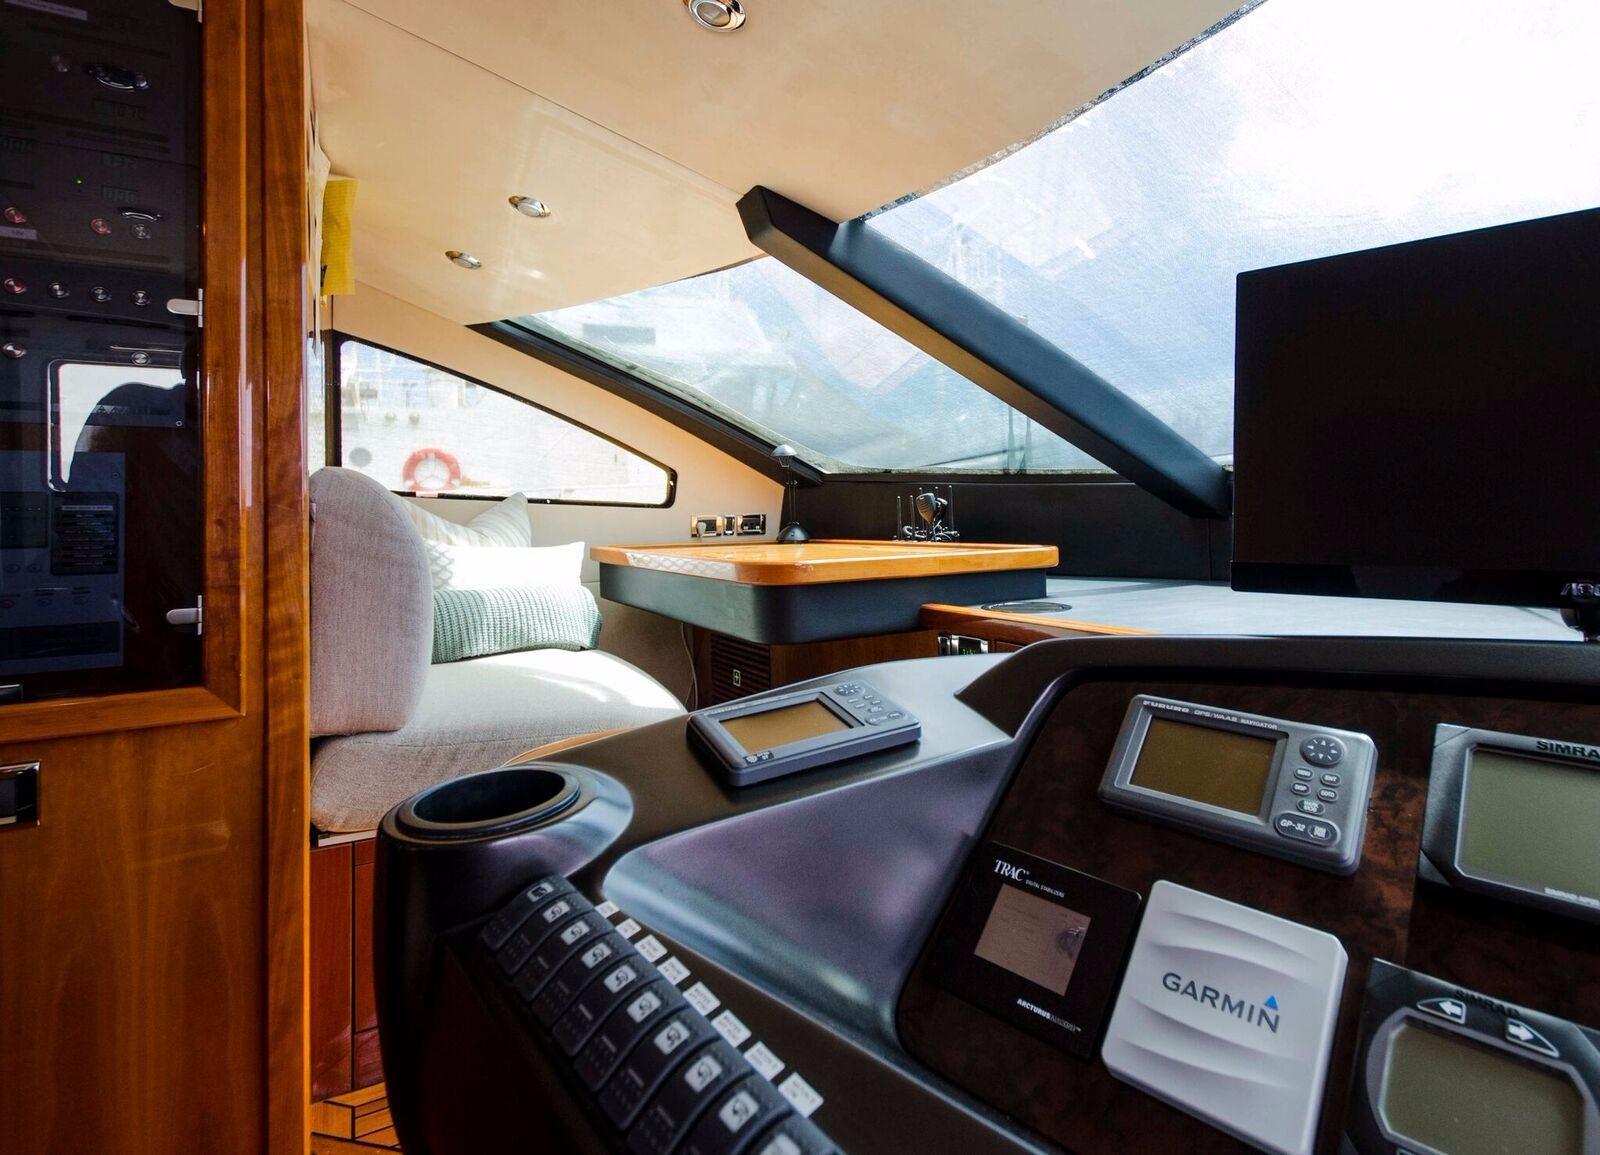 Wheelhouse Image Gallery – Luxury Yacht Browser | by CHARTERWORLD ...